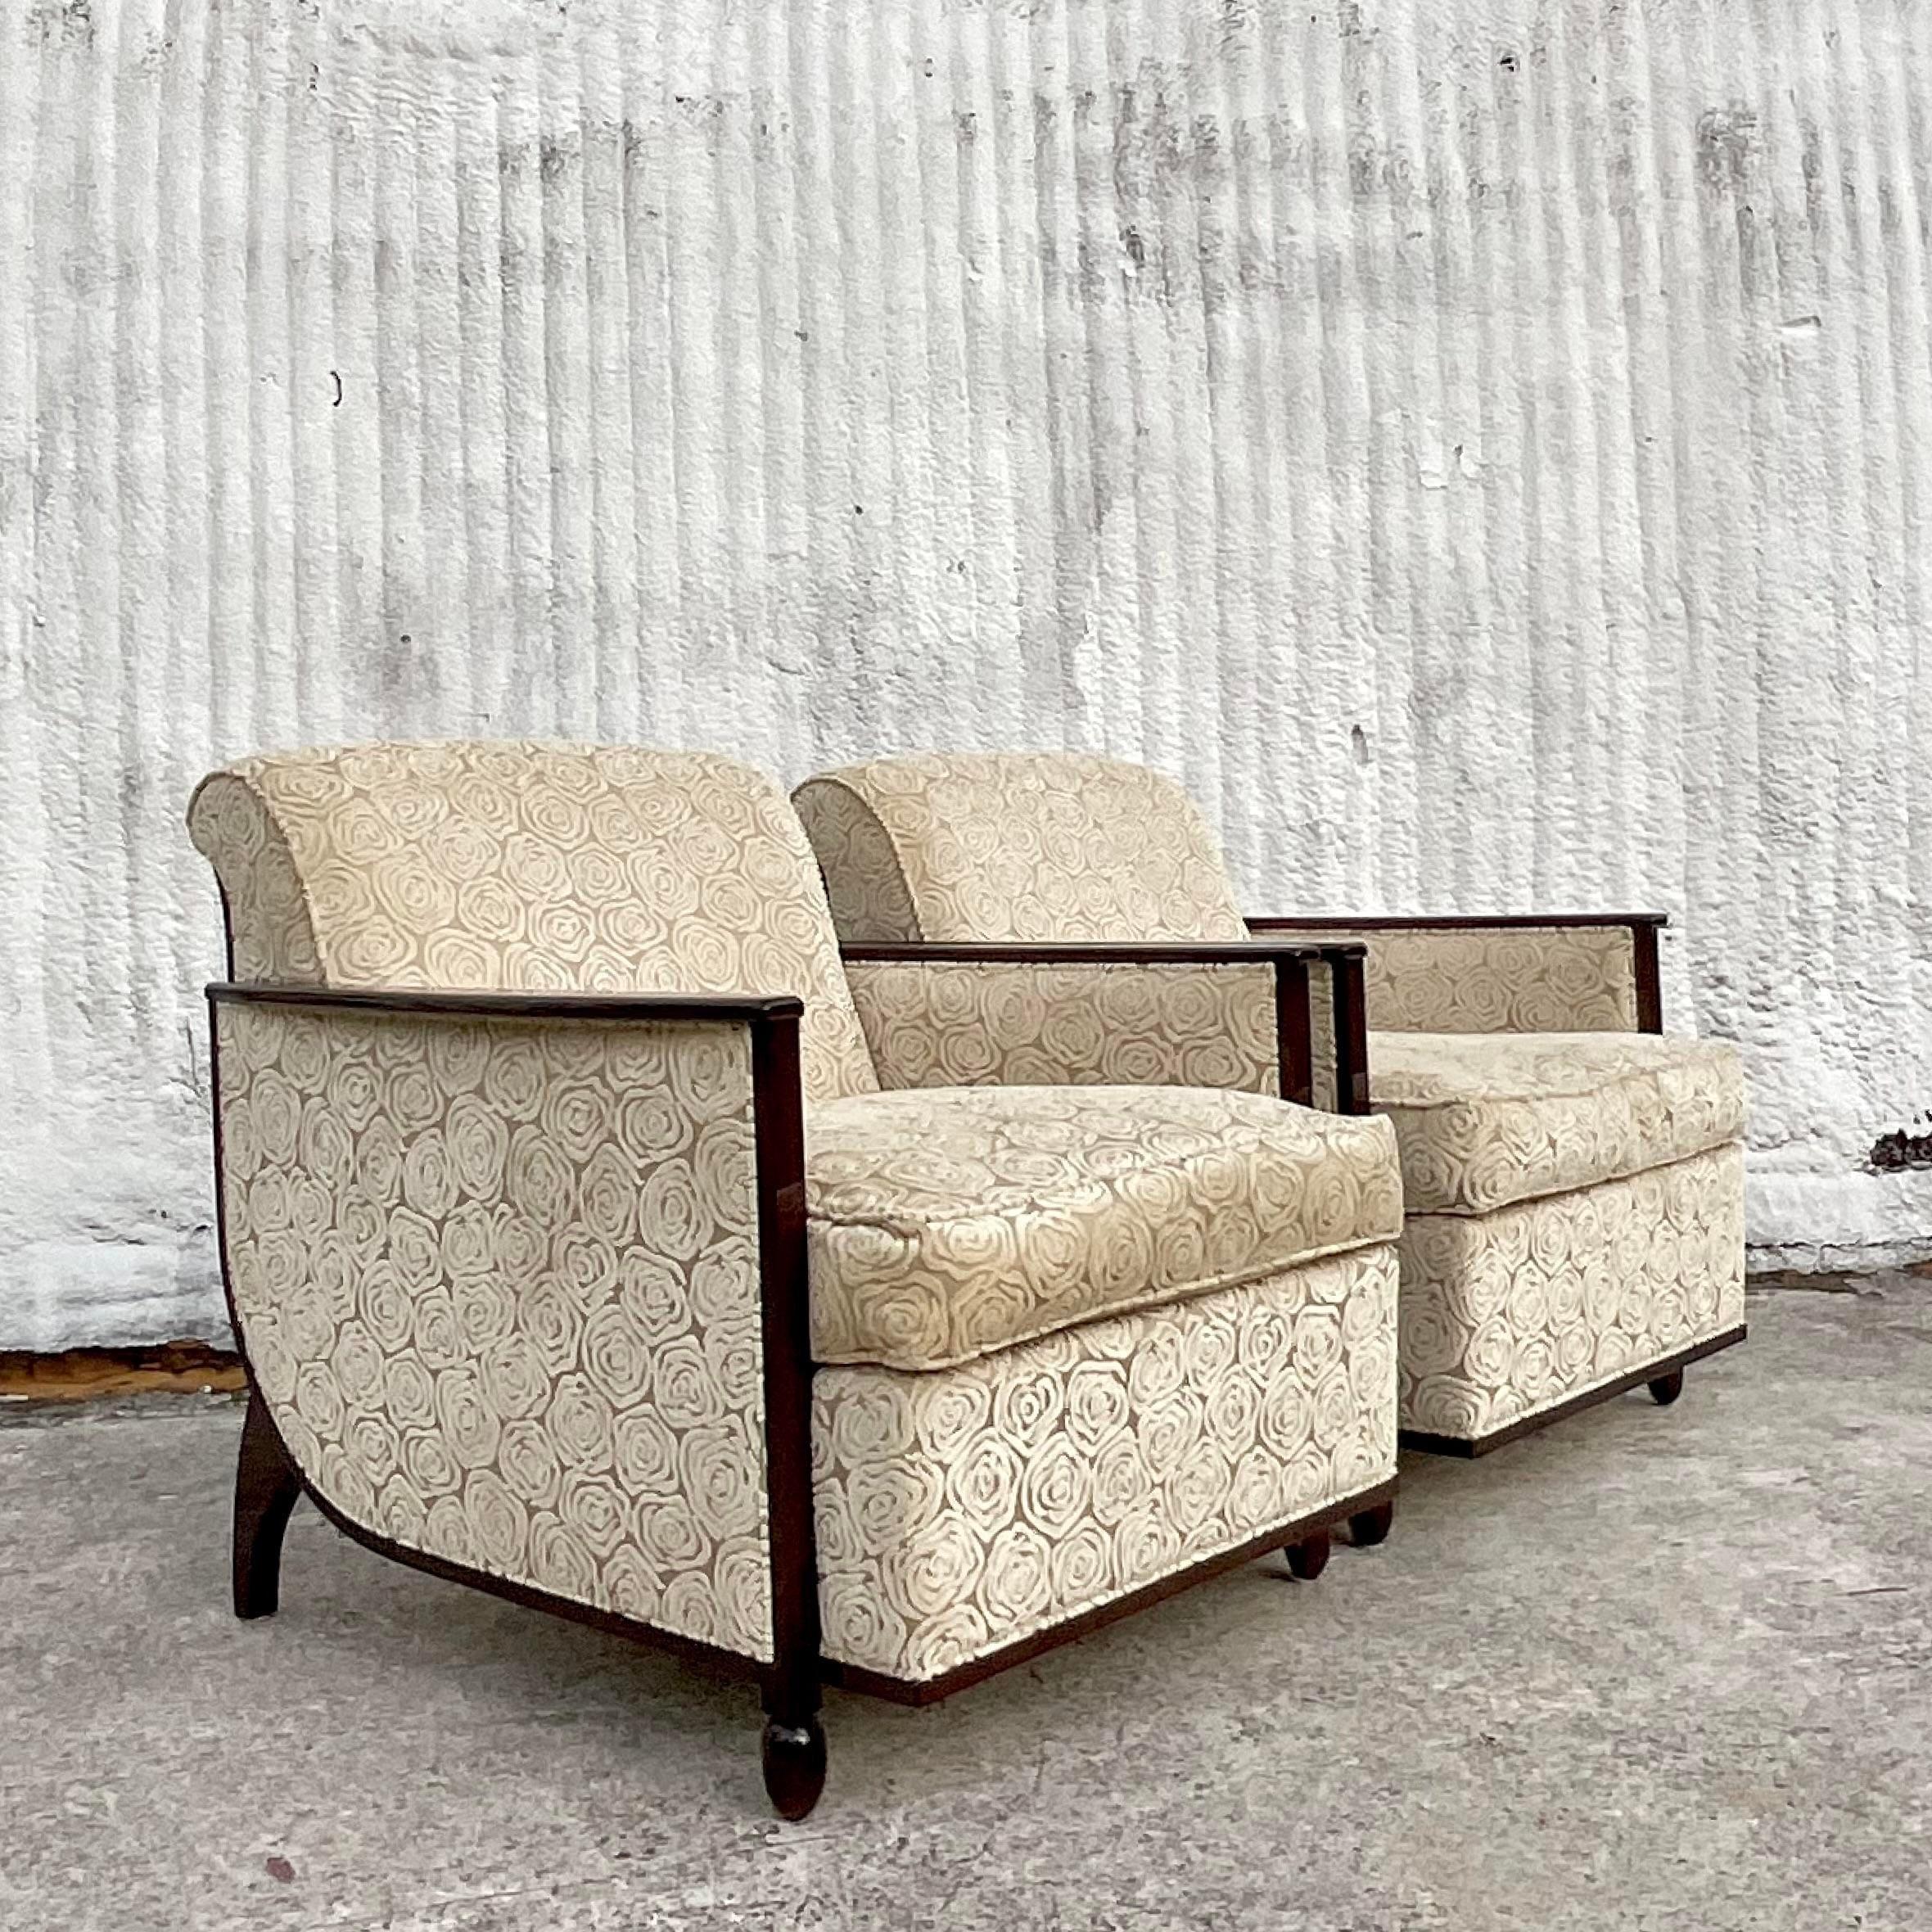 American Vintage Custom Geoffrey Bradfield Deco Lounge Chairs - a Pair For Sale